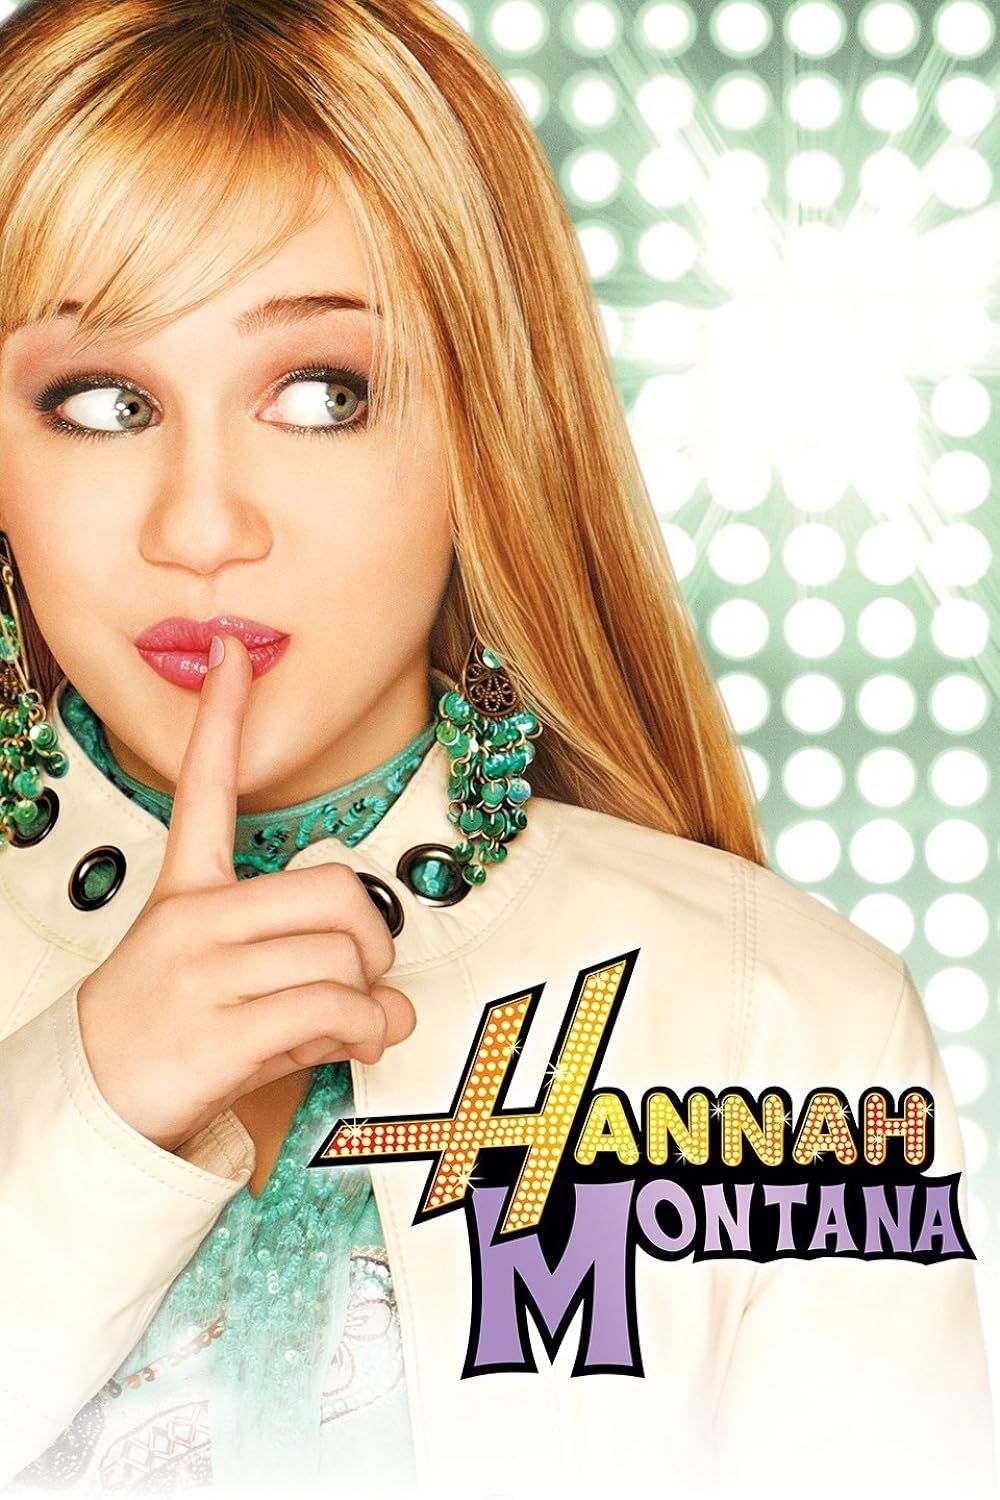 Miley Cyrus in Hannah Montana (2006)